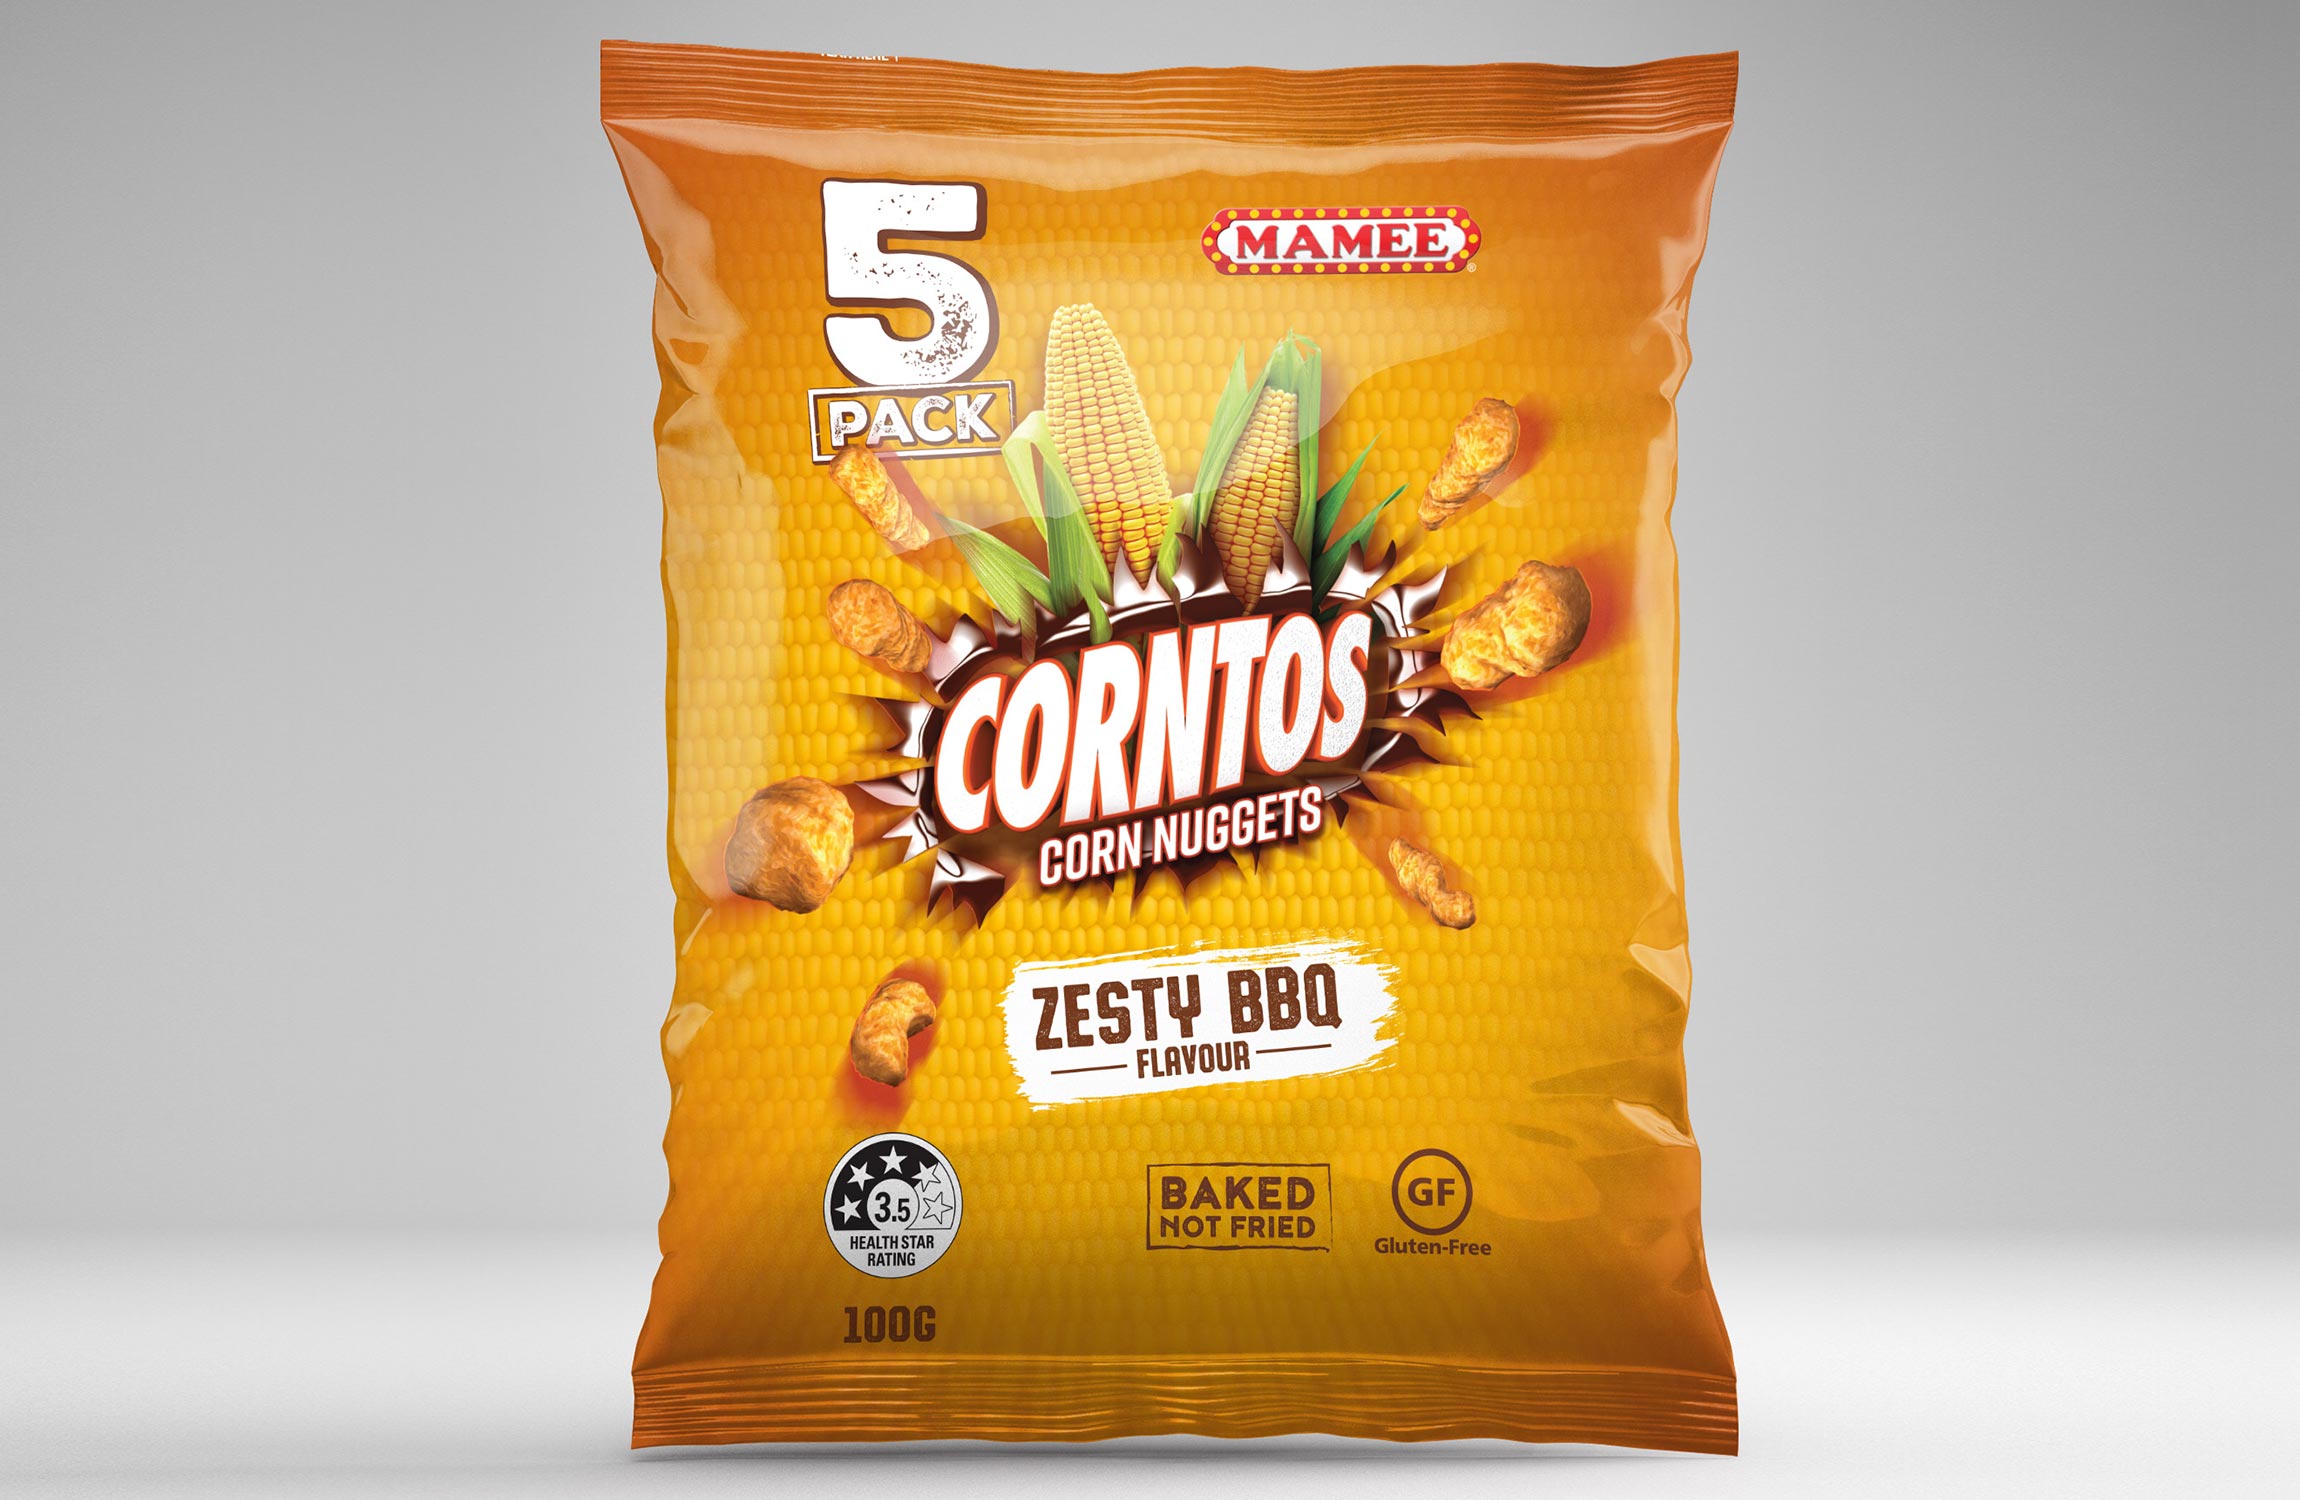 Mamee Corntos BBQ Packaging Design